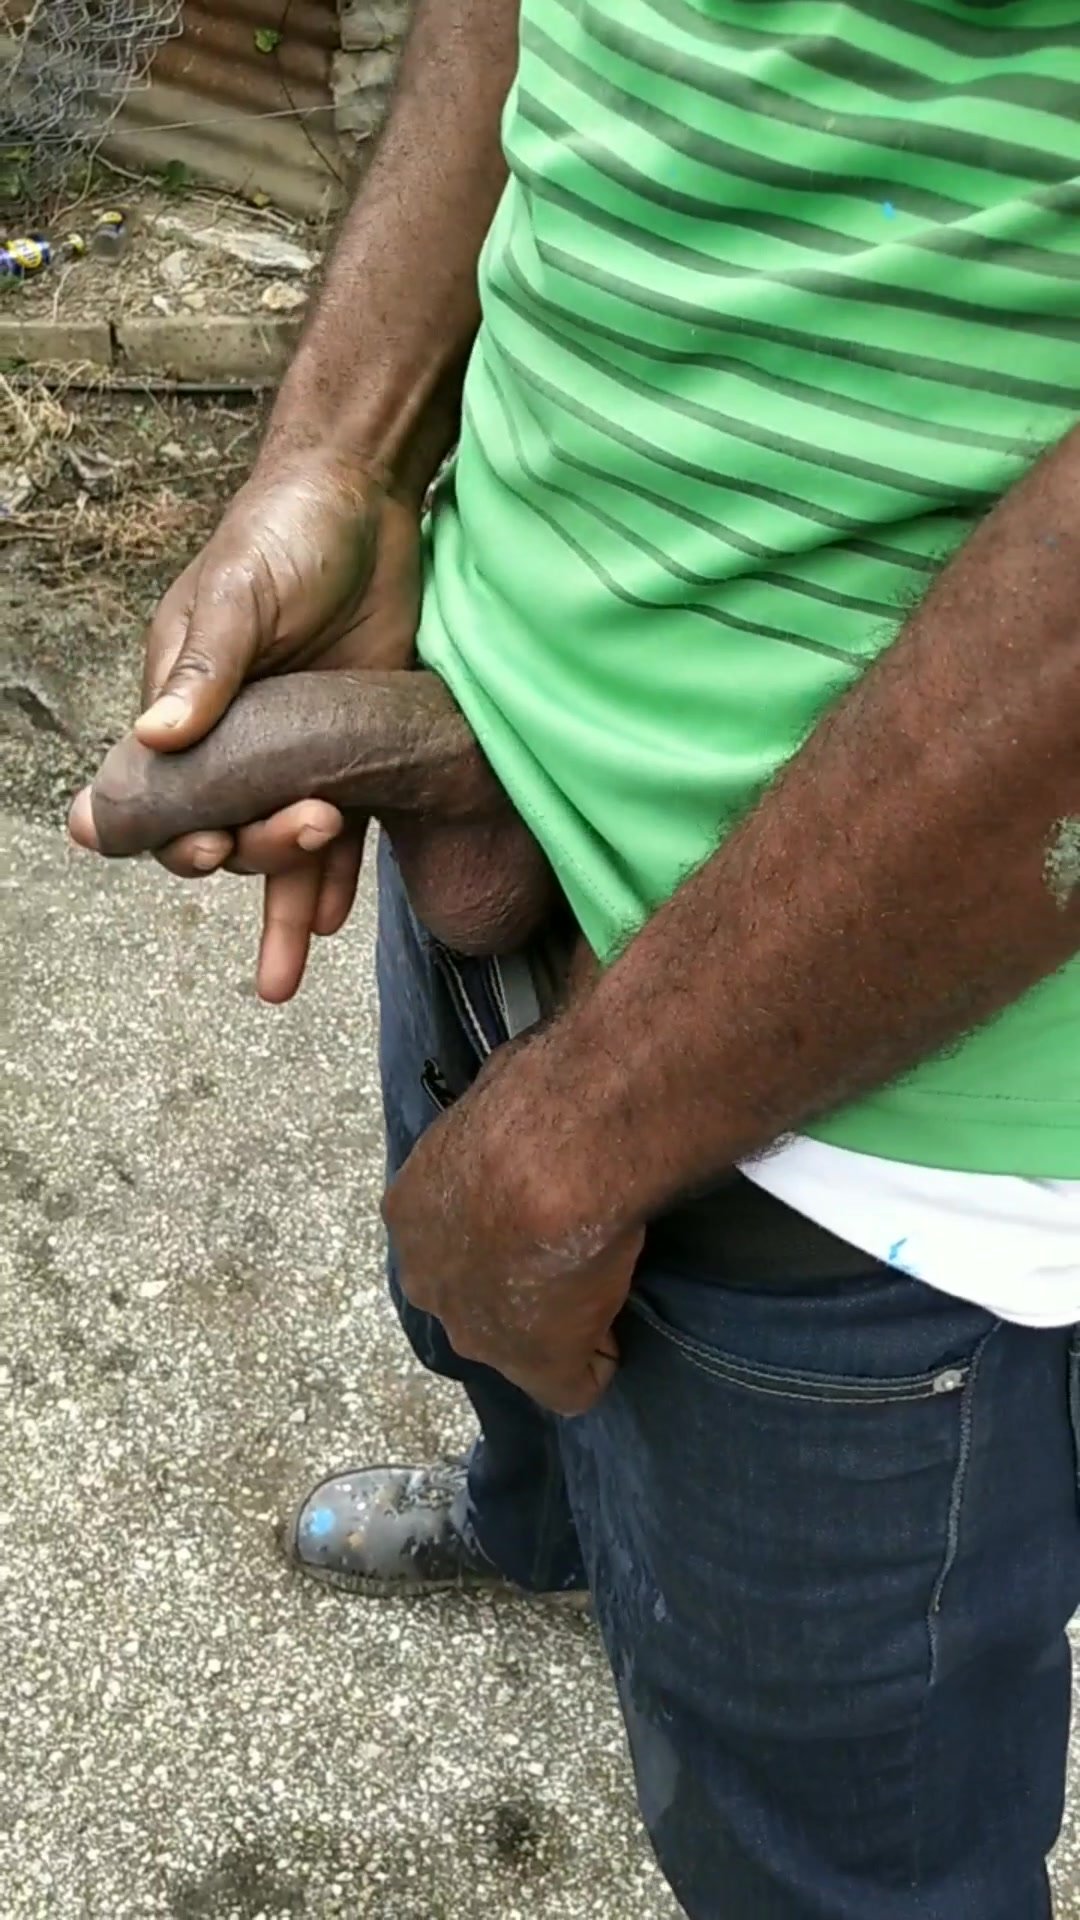 Paid Trinidad homeless man to Cum